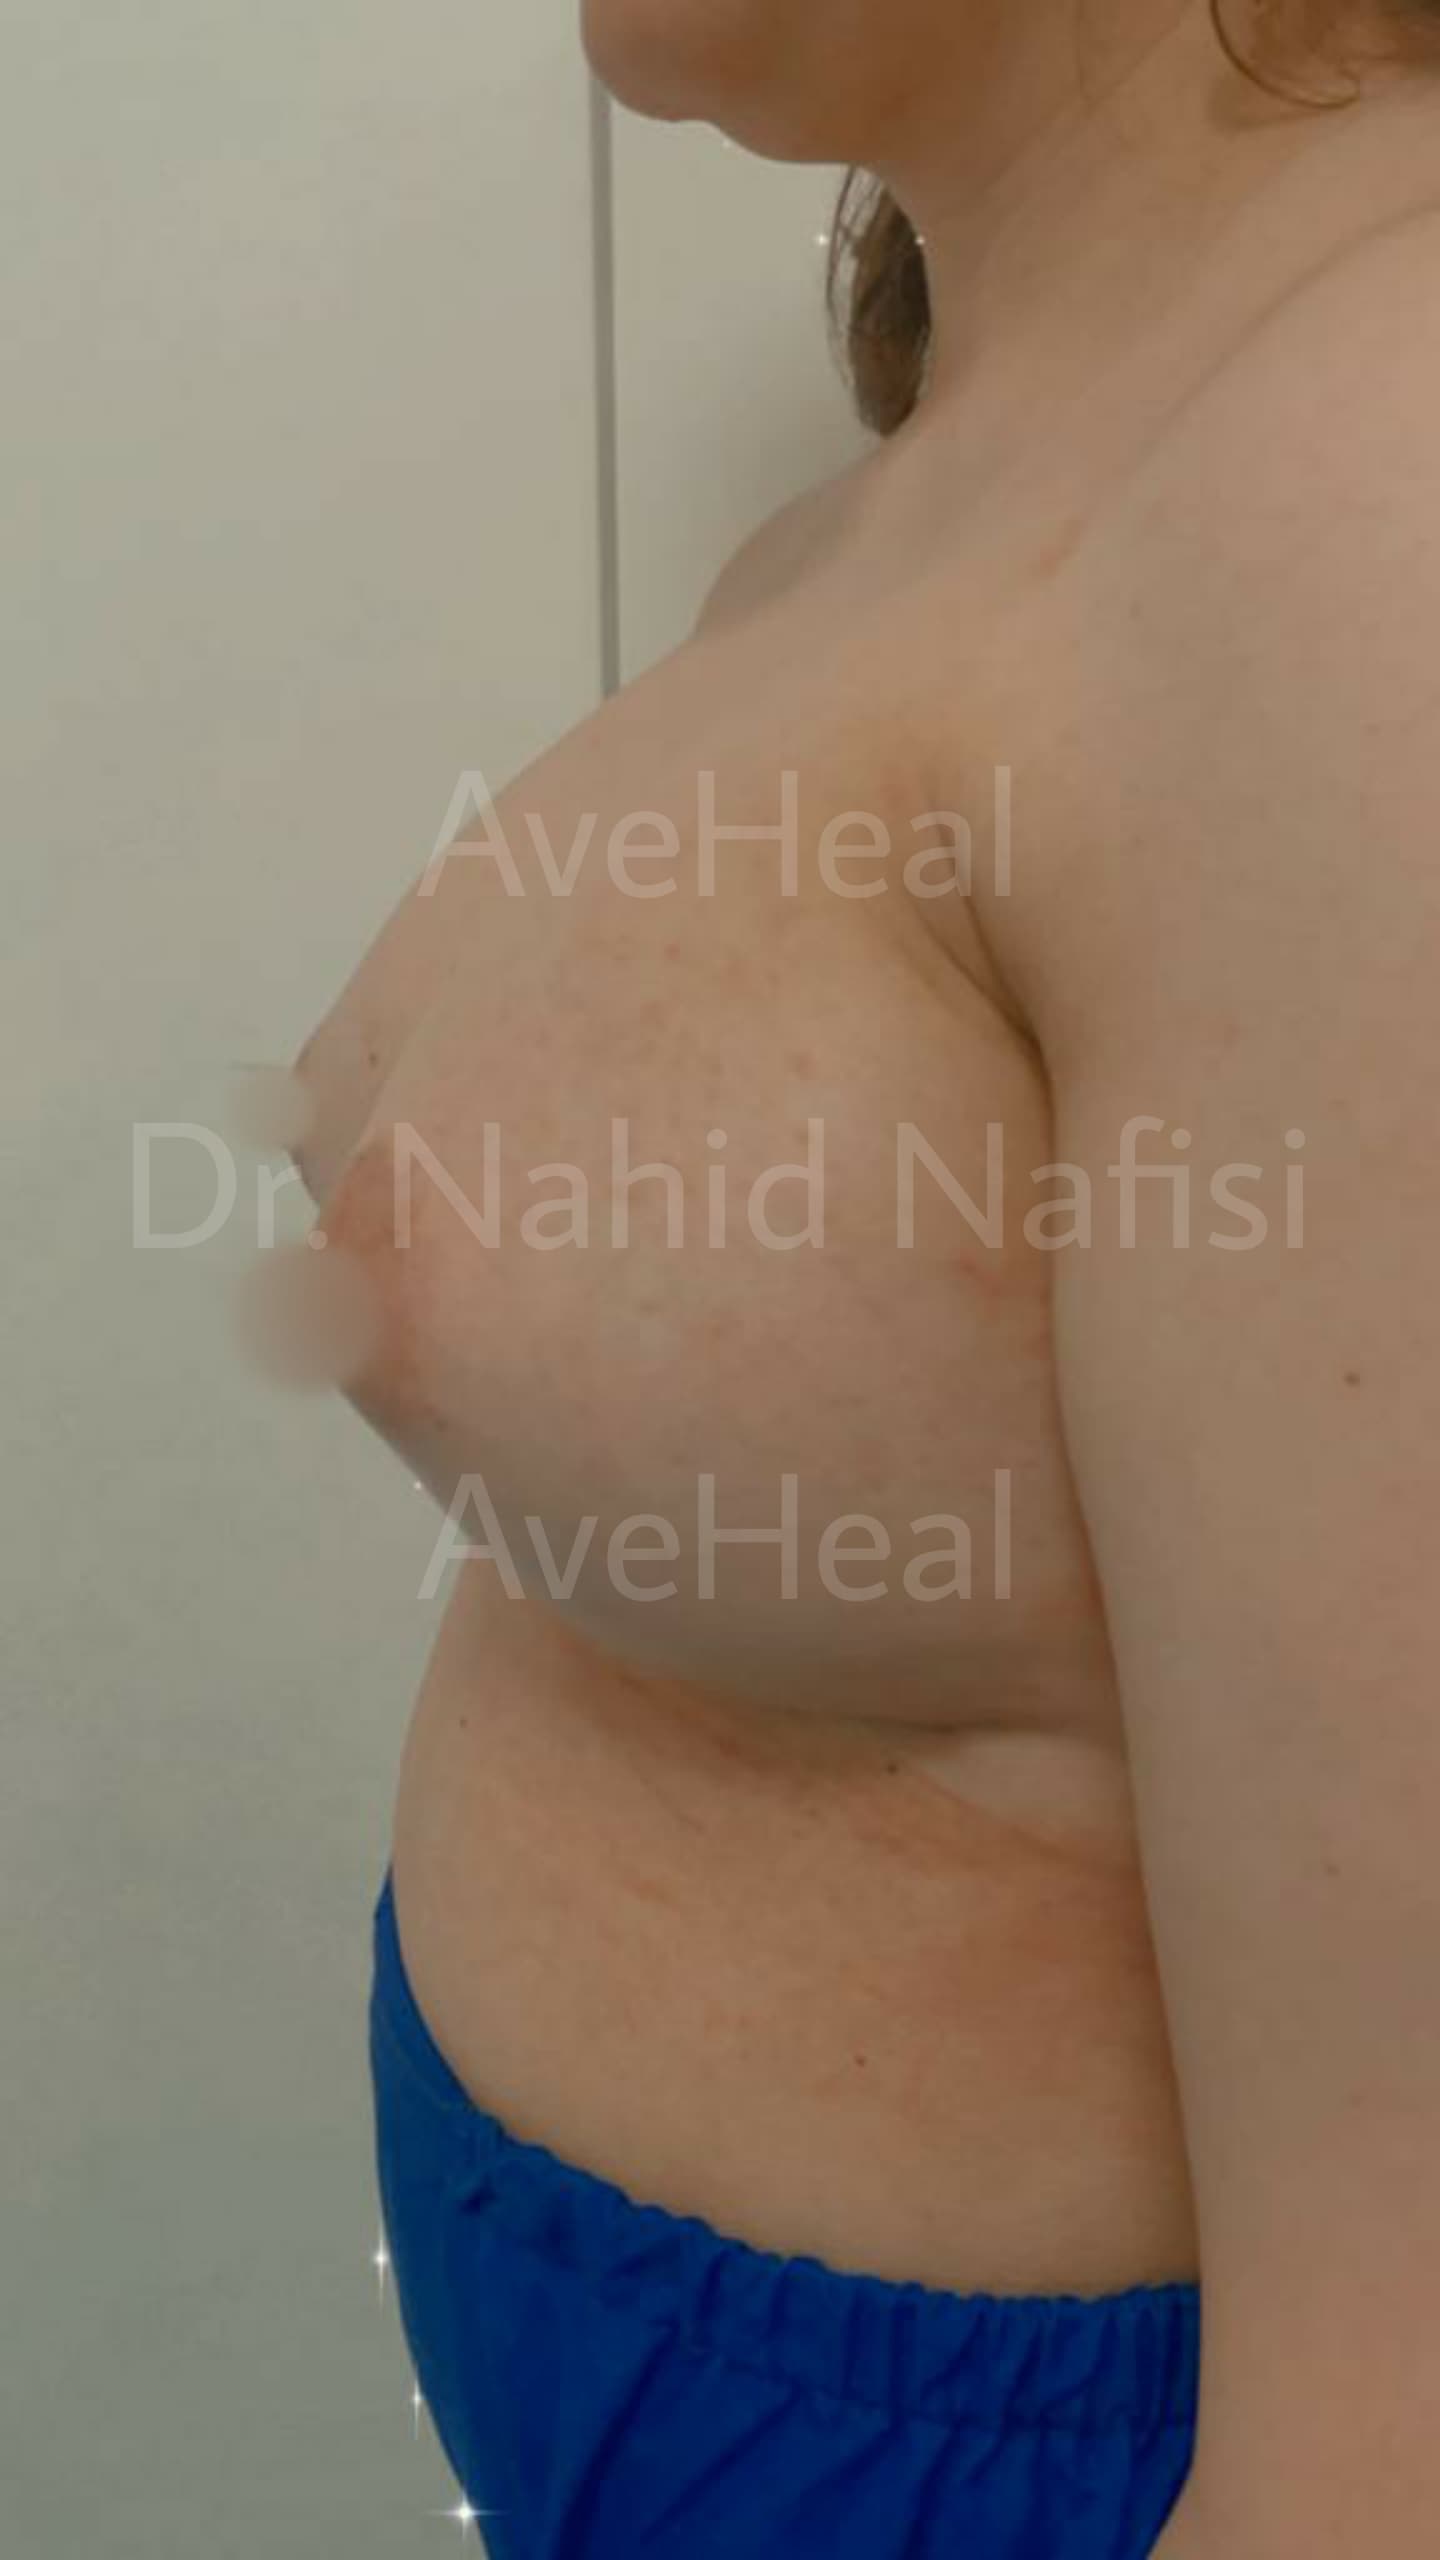 after-breast-augmentation-dr-nahid-nafisi